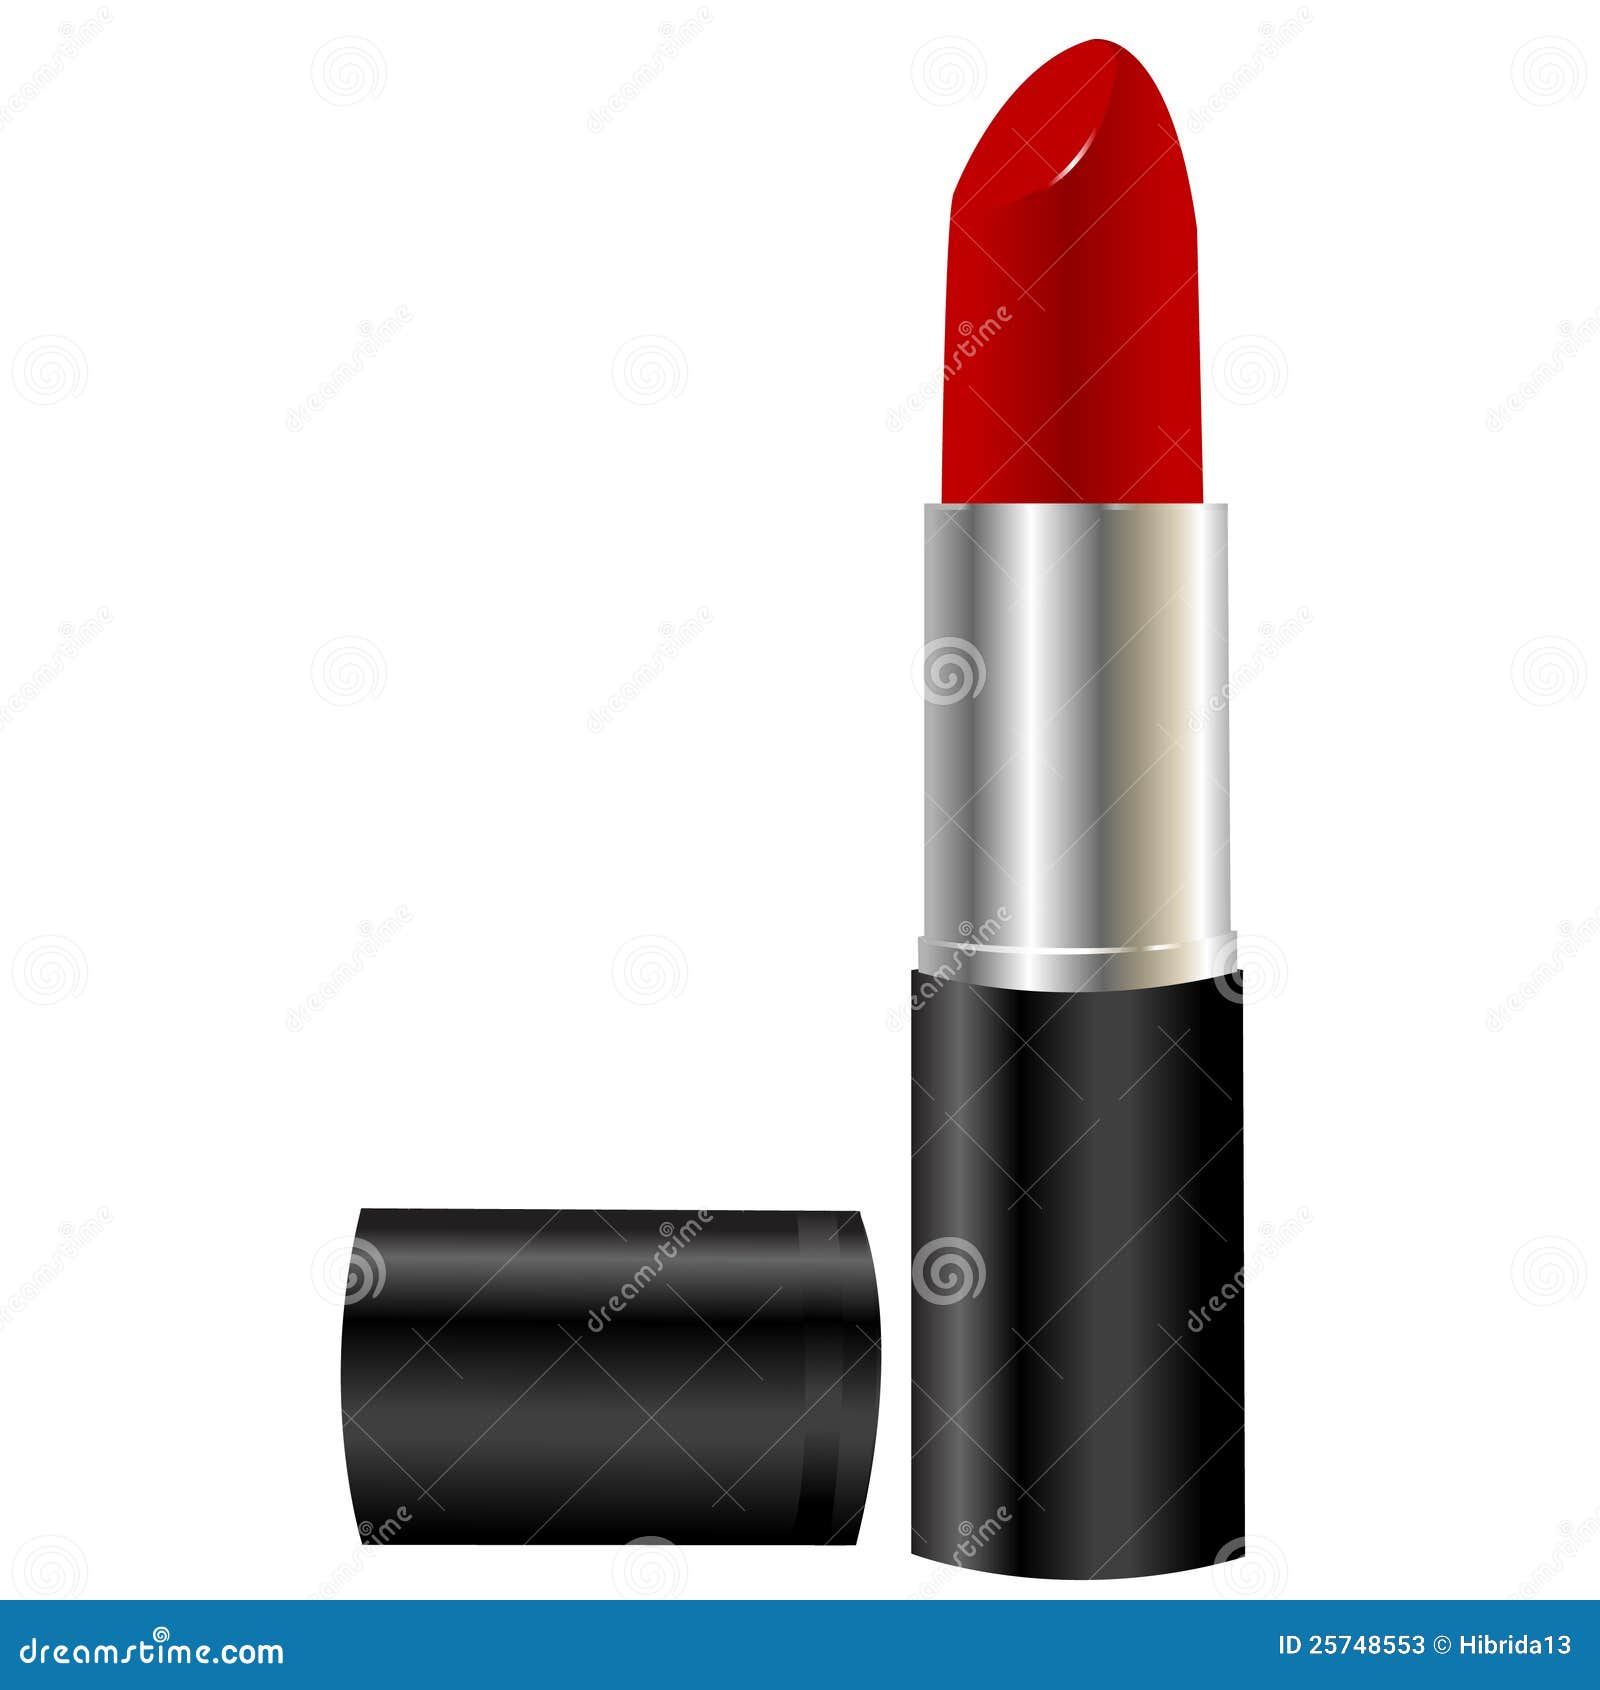 Lipstick Isolated Over White Background Stock Photos - Image: 25748553